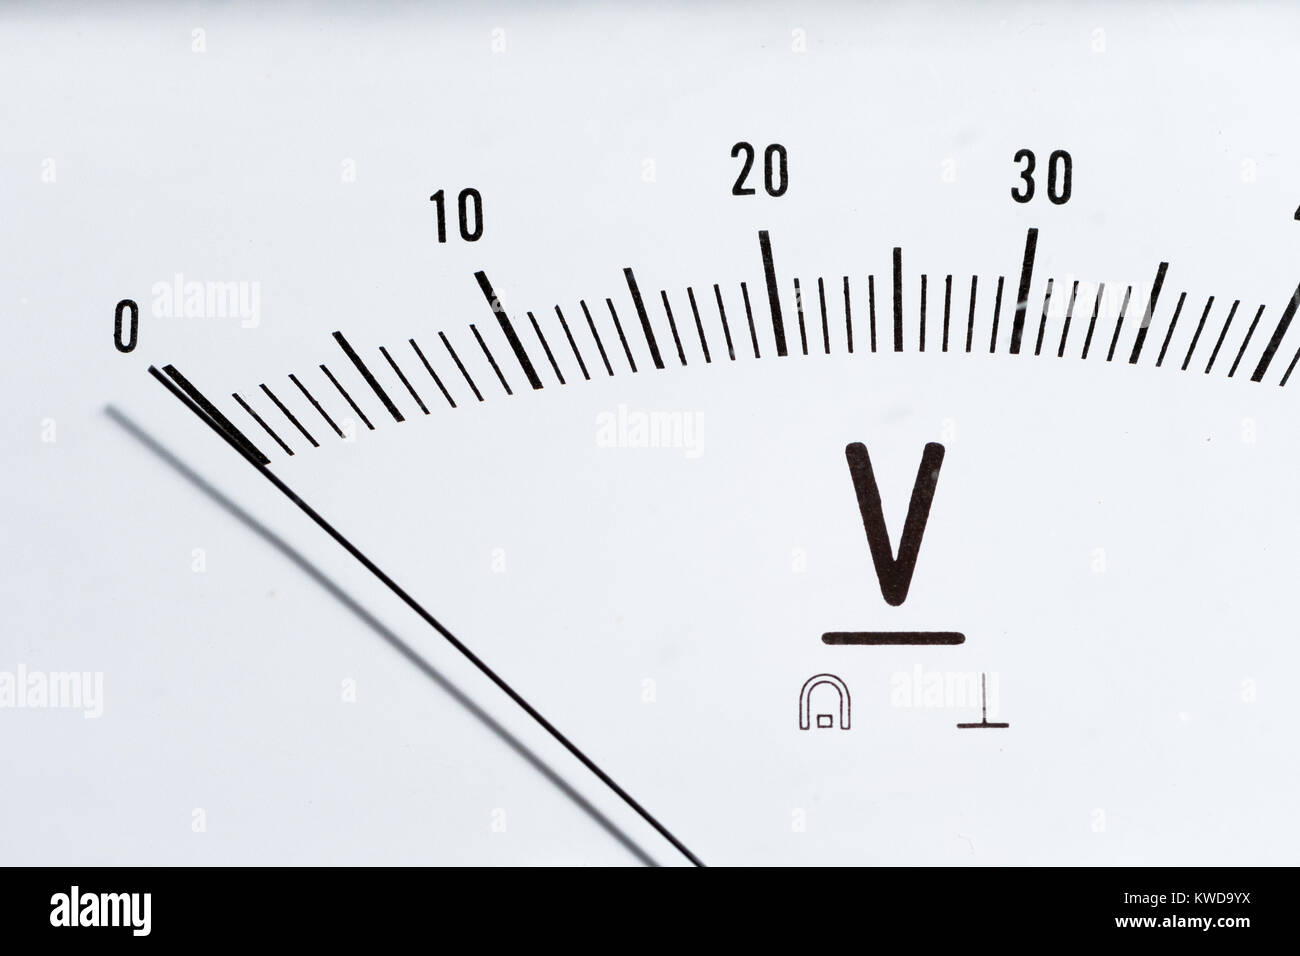 Blanko Messinstrument, Analog Voltmeter